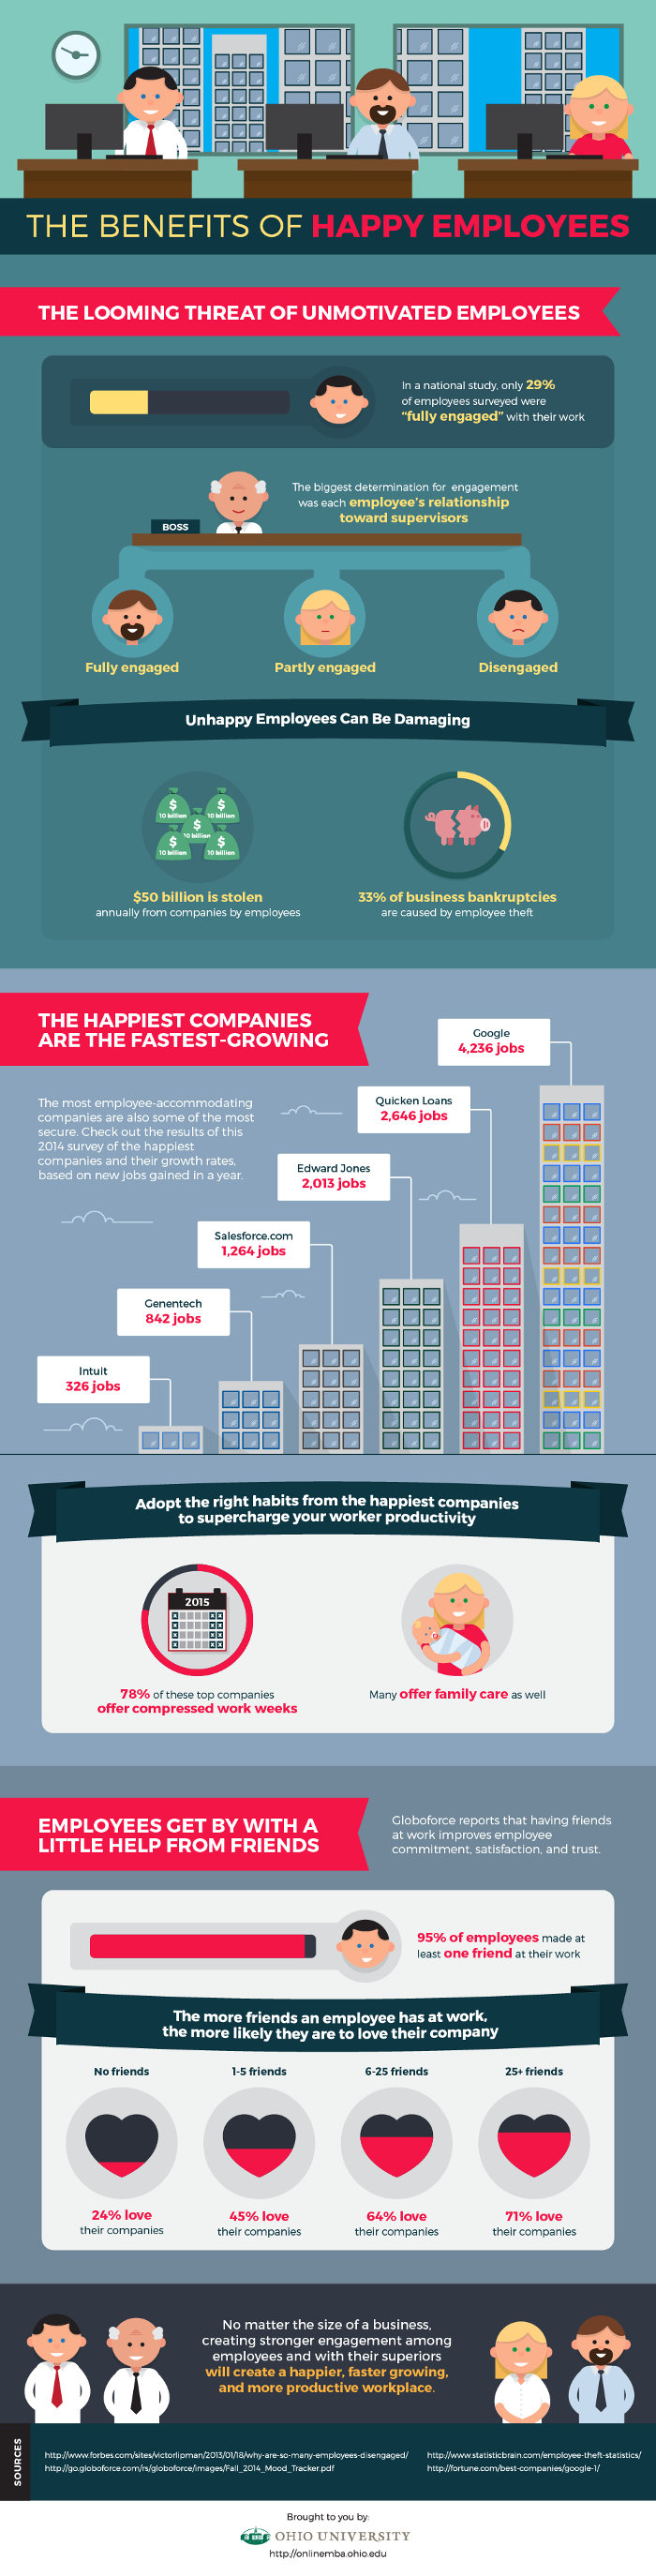 The benefits of happy employees - infographic by Ohio University